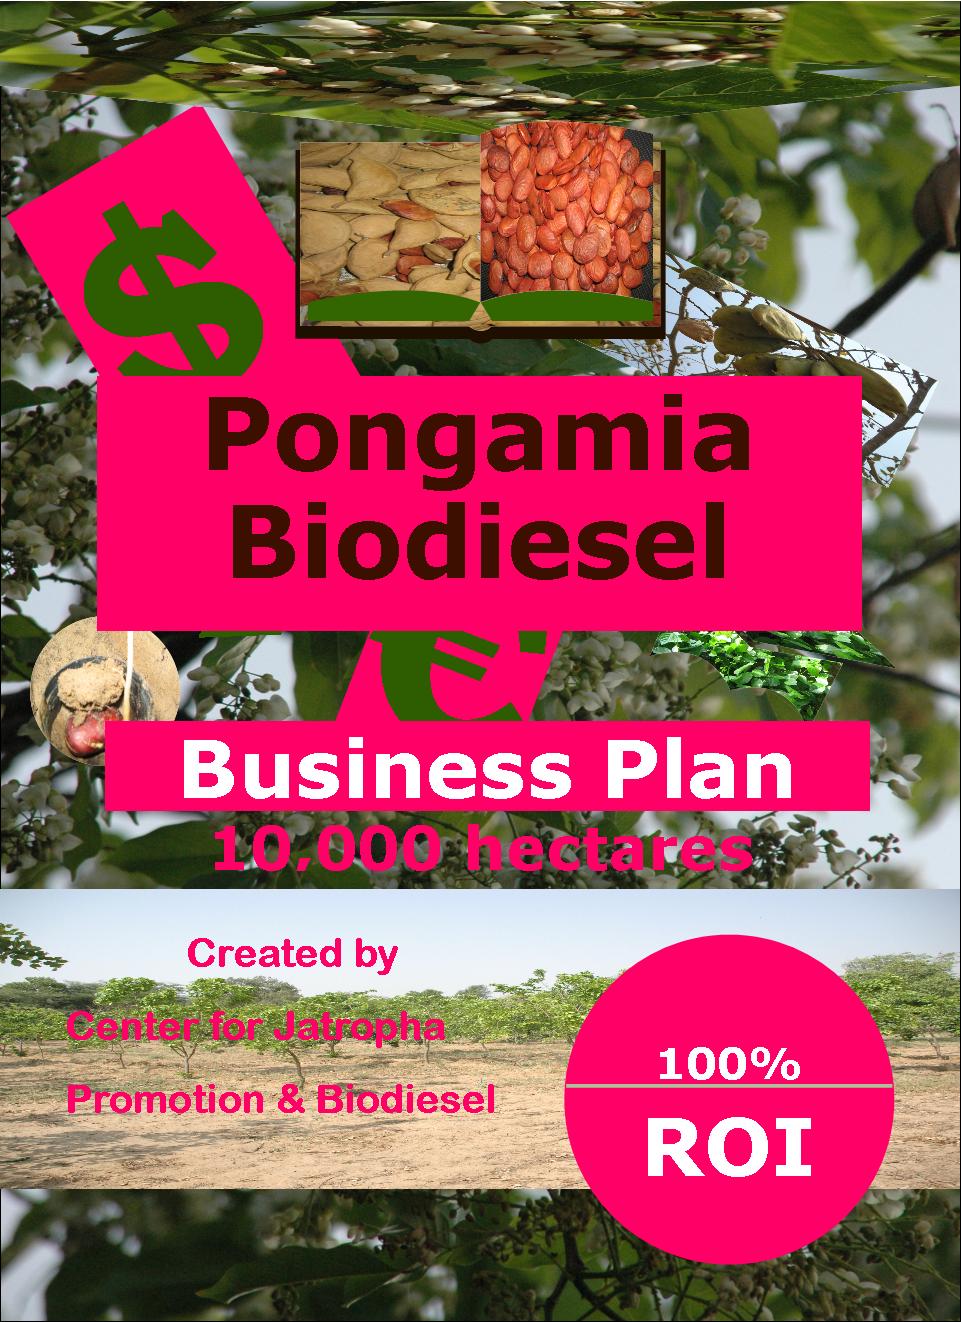 pongamia biodiesel business plan 10 k ha